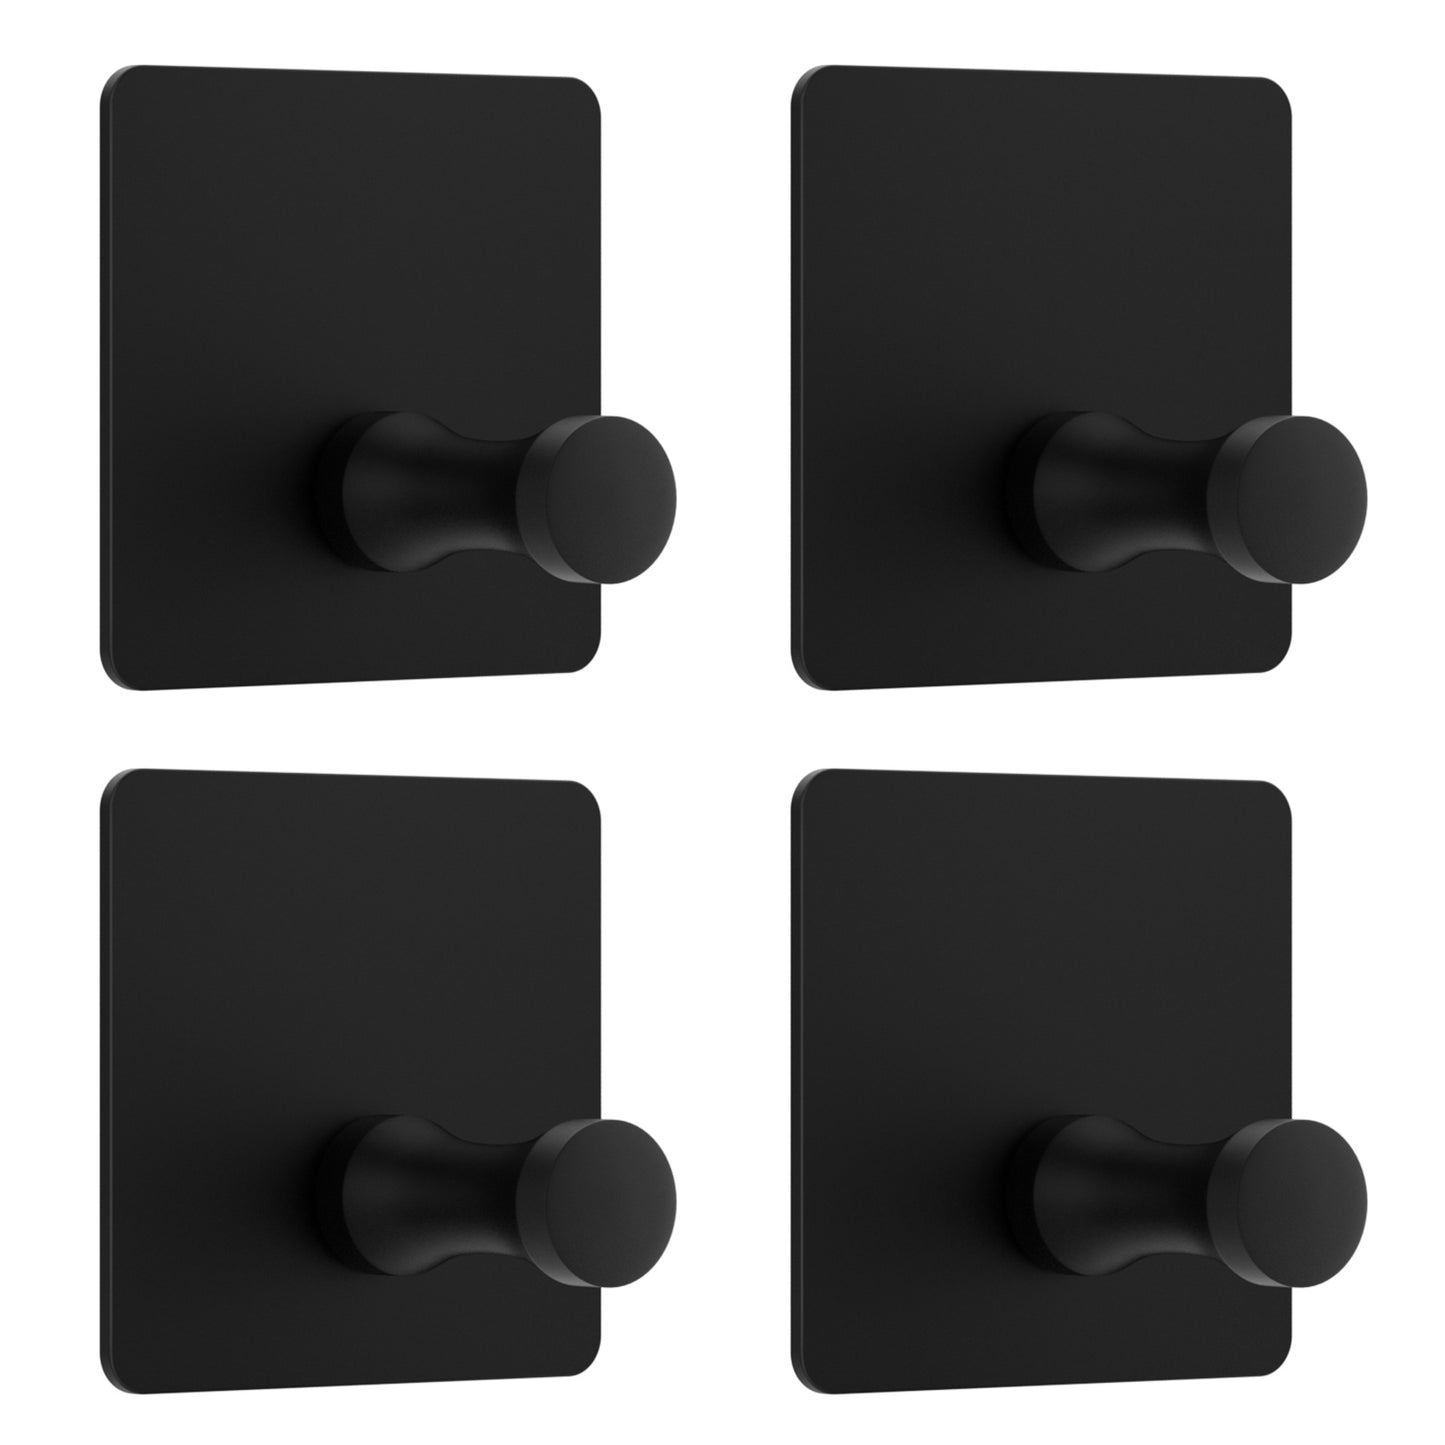 6pcs Black Self-Adhesive Wall Hooks, No Damage Door Hooks For